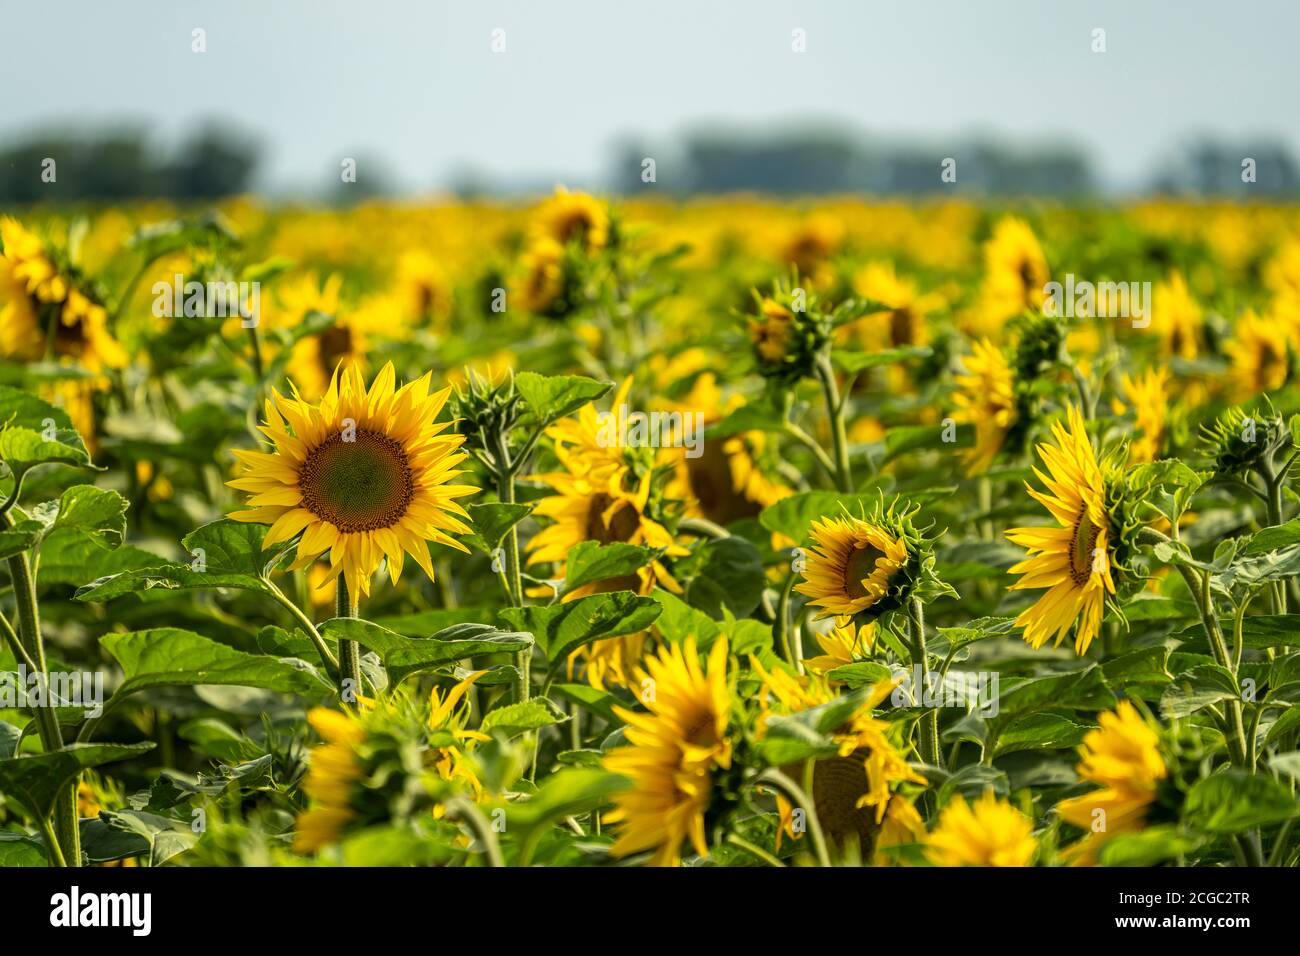 Feld mit Sonnenblumen bei Jerichow, Sachsen-Anhalt, Deutschland | campo di girasole nei pressi di Jerichow, Sassonia-Anhalt, Germania Foto Stock